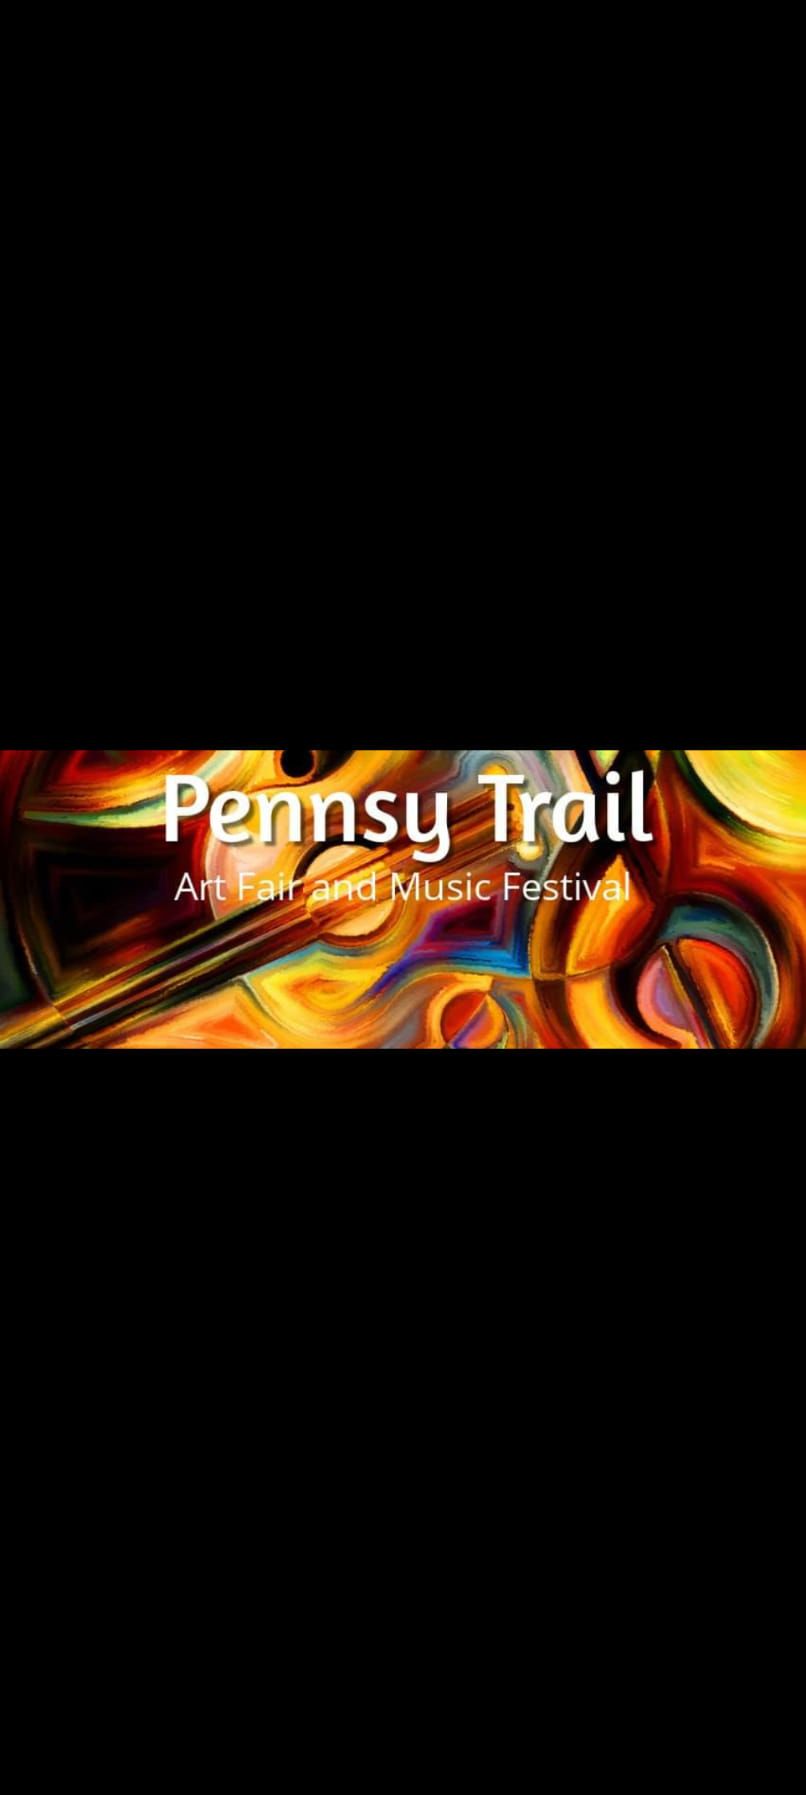 Pennsy Trail Art Fair and Music Festival 